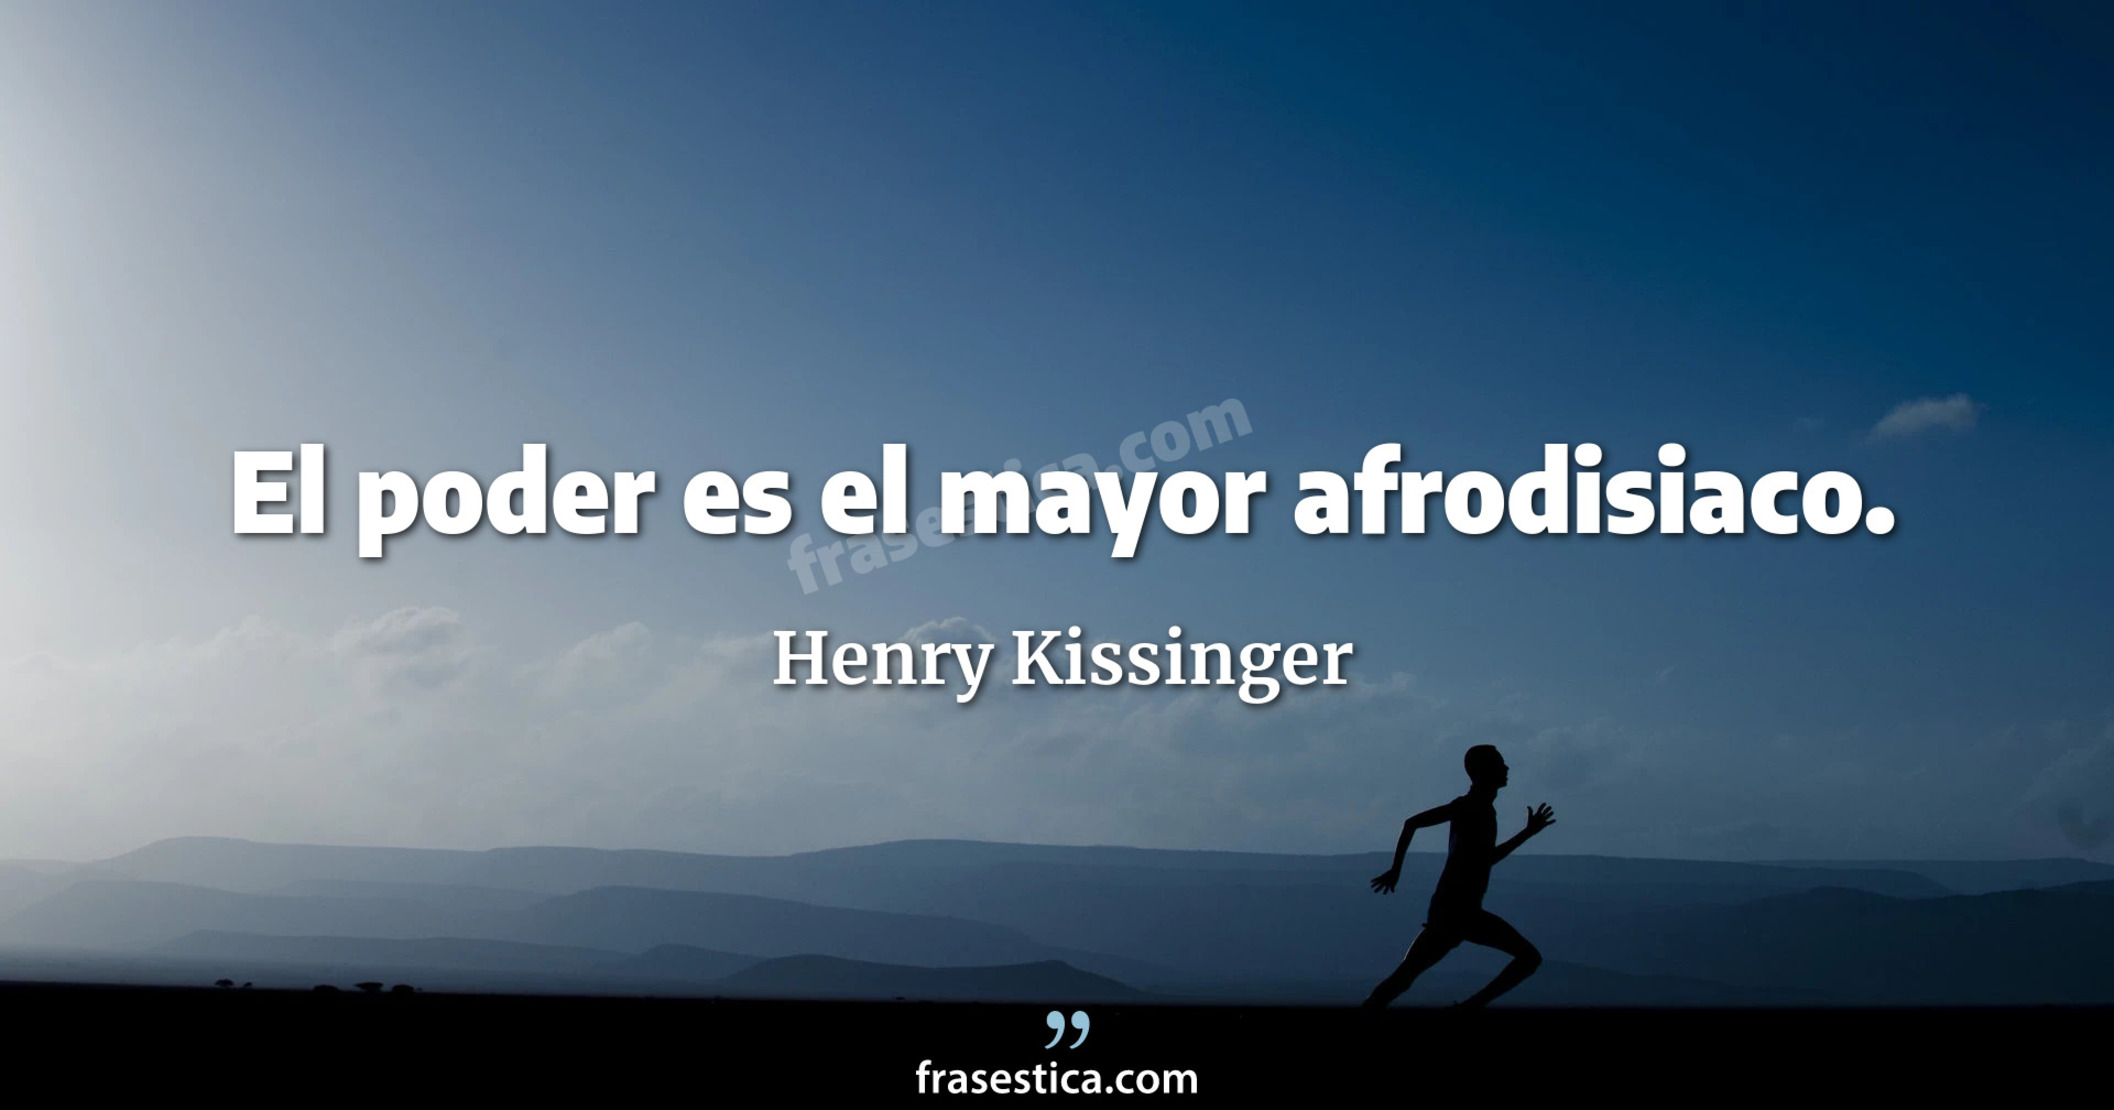 El poder es el mayor afrodisiaco. - Henry Kissinger